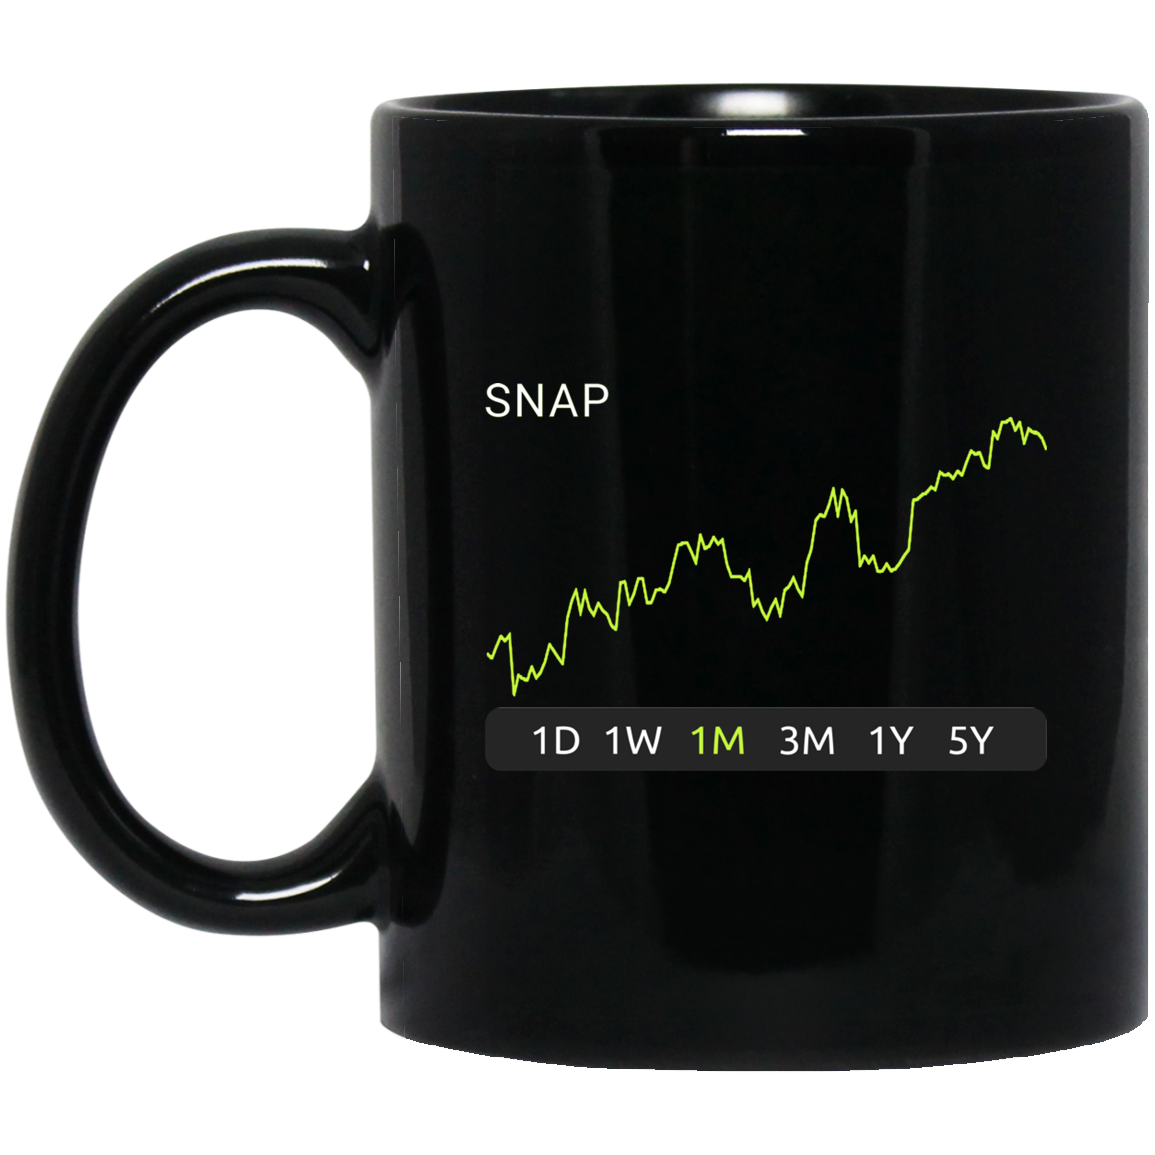 SNAP Stock 1m Mug